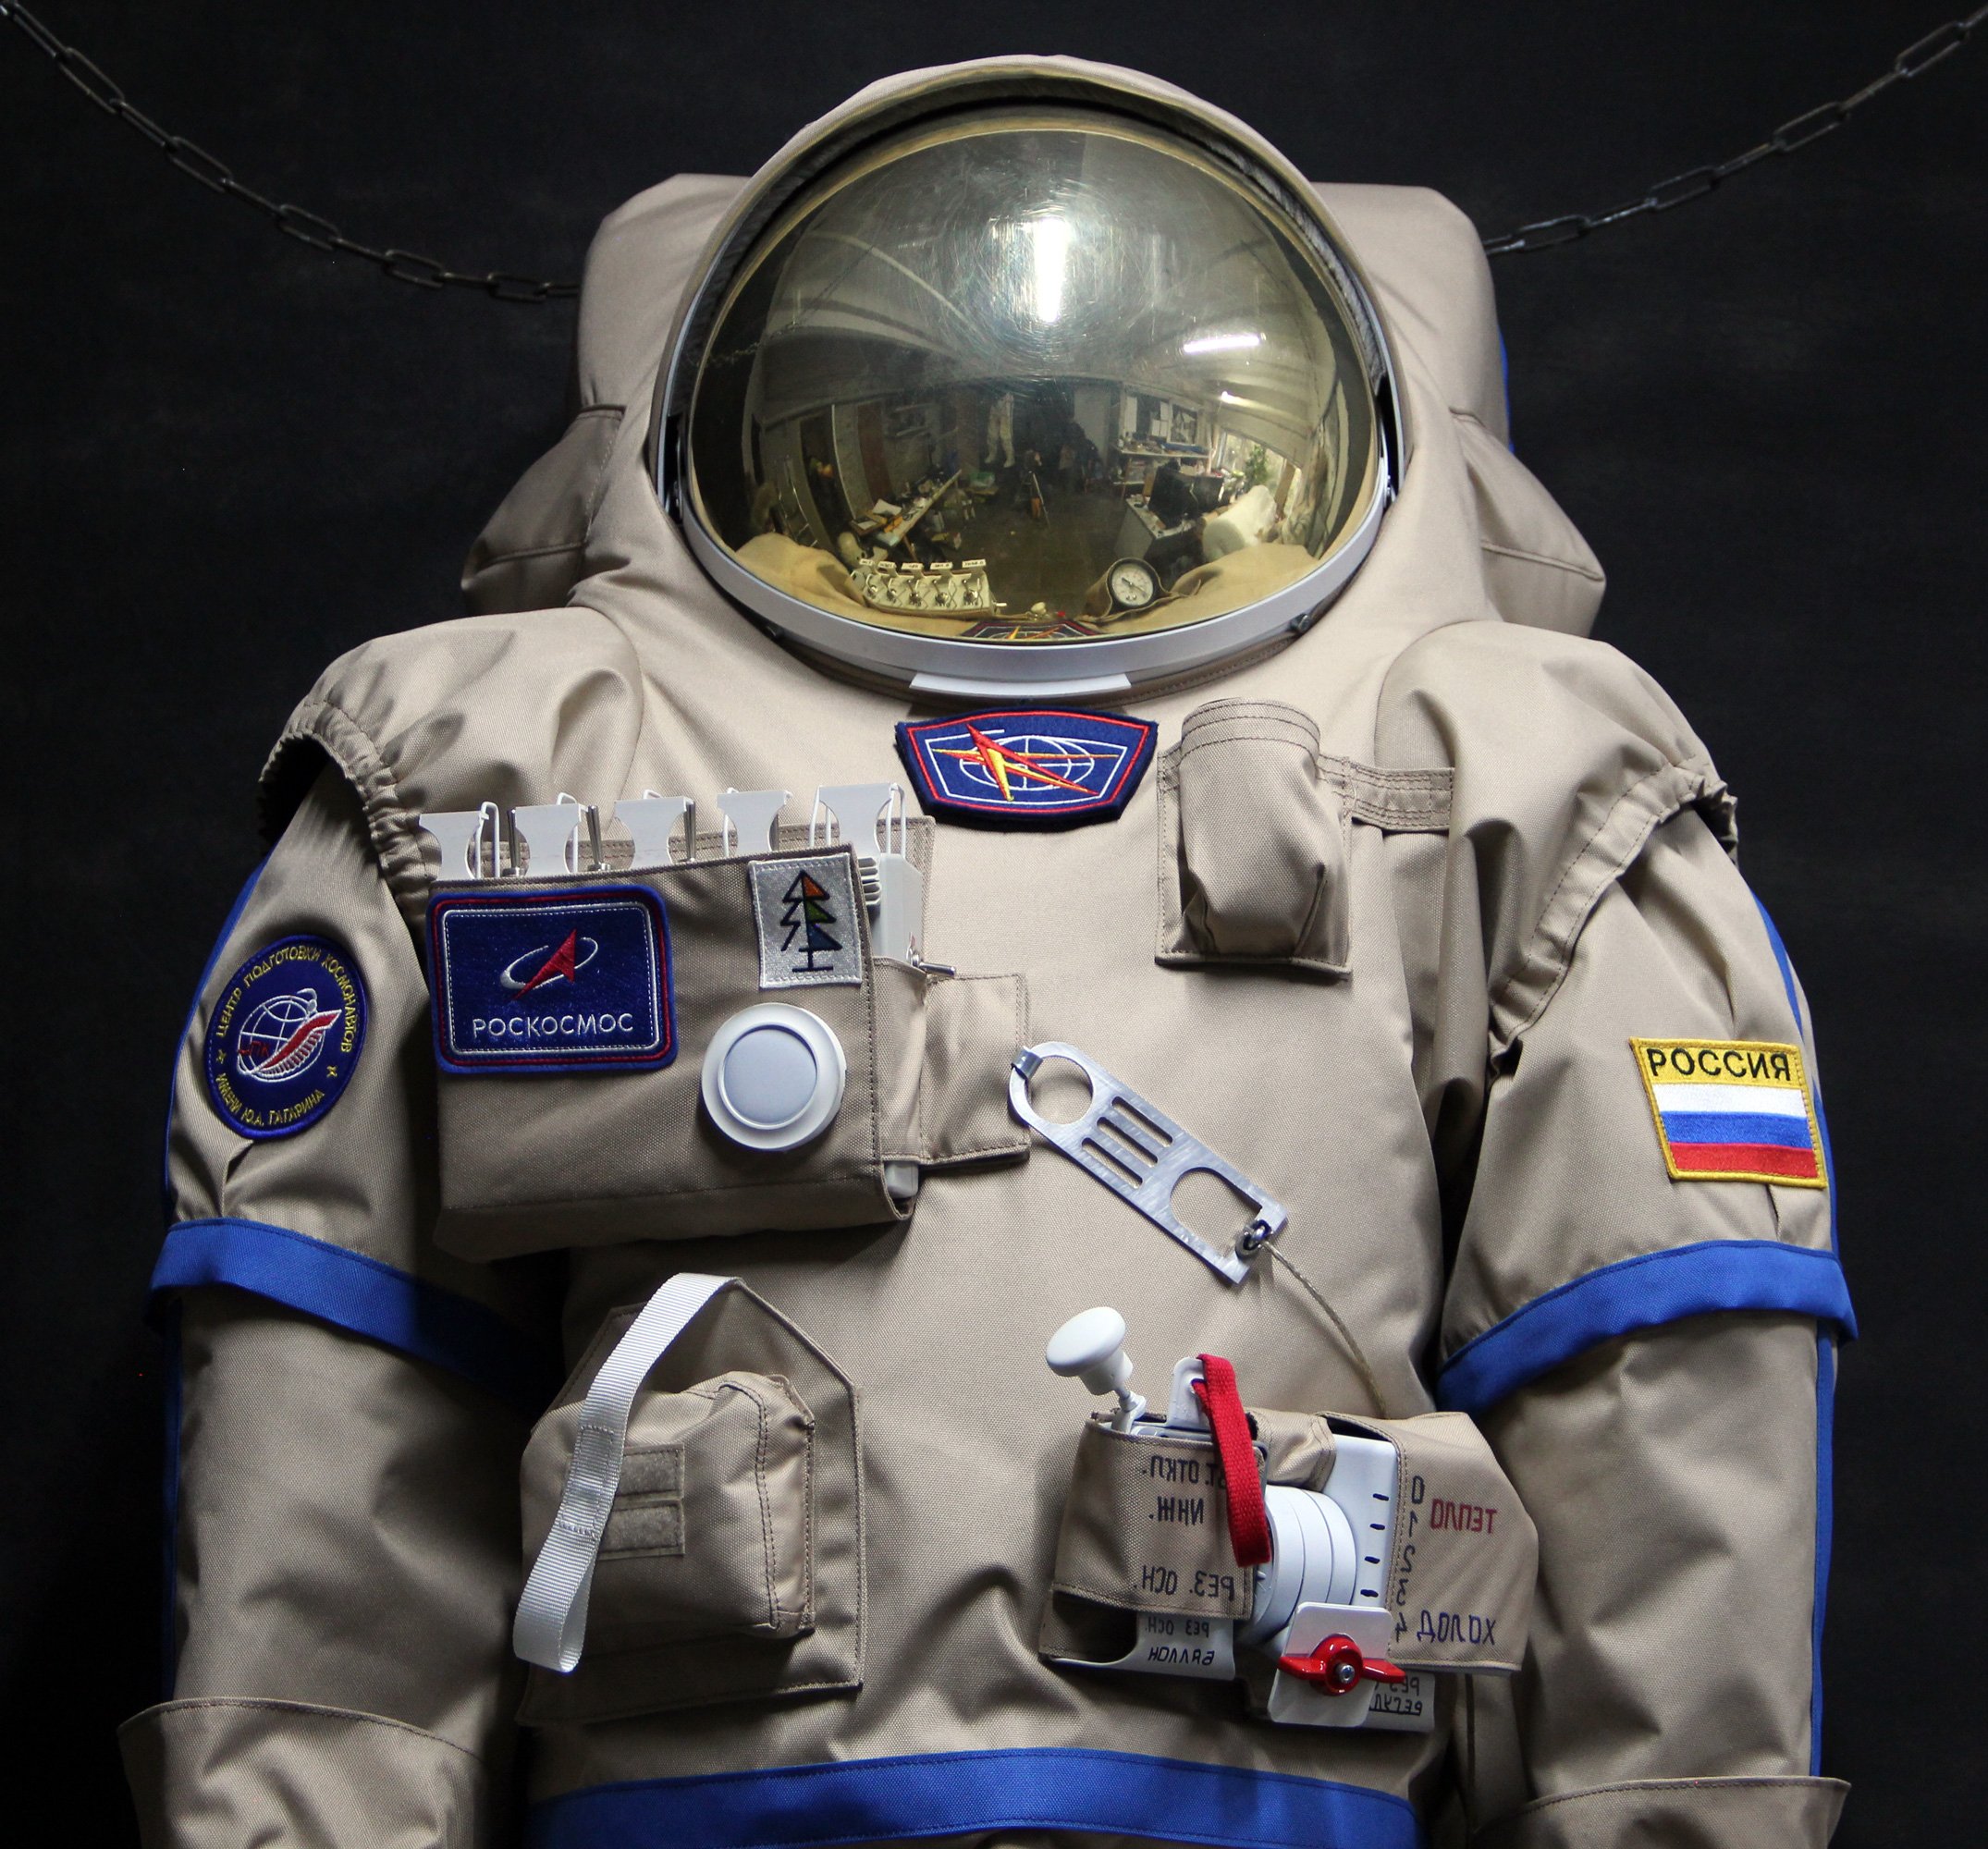 Скафандр российского космонавта. Скафандр Орлан МКС. Орлан костюм Космонавта. Шлем Орлан МКС. Скафандр Орлан ДМА.